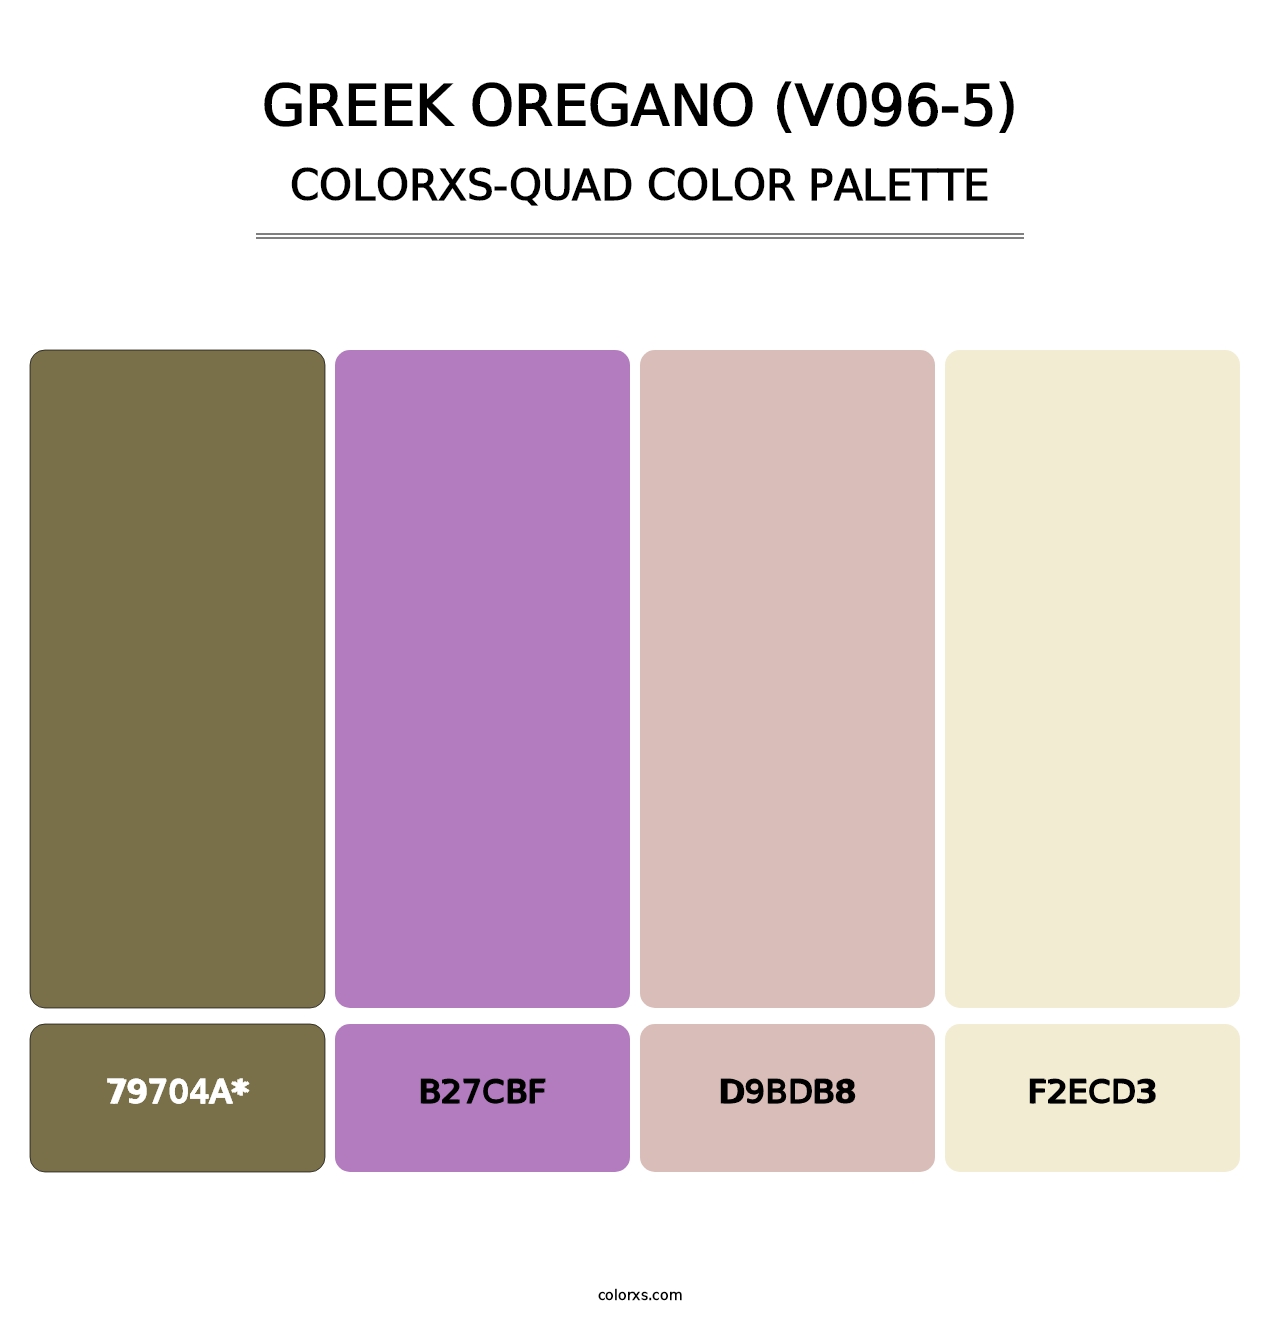 Greek Oregano (V096-5) - Colorxs Quad Palette